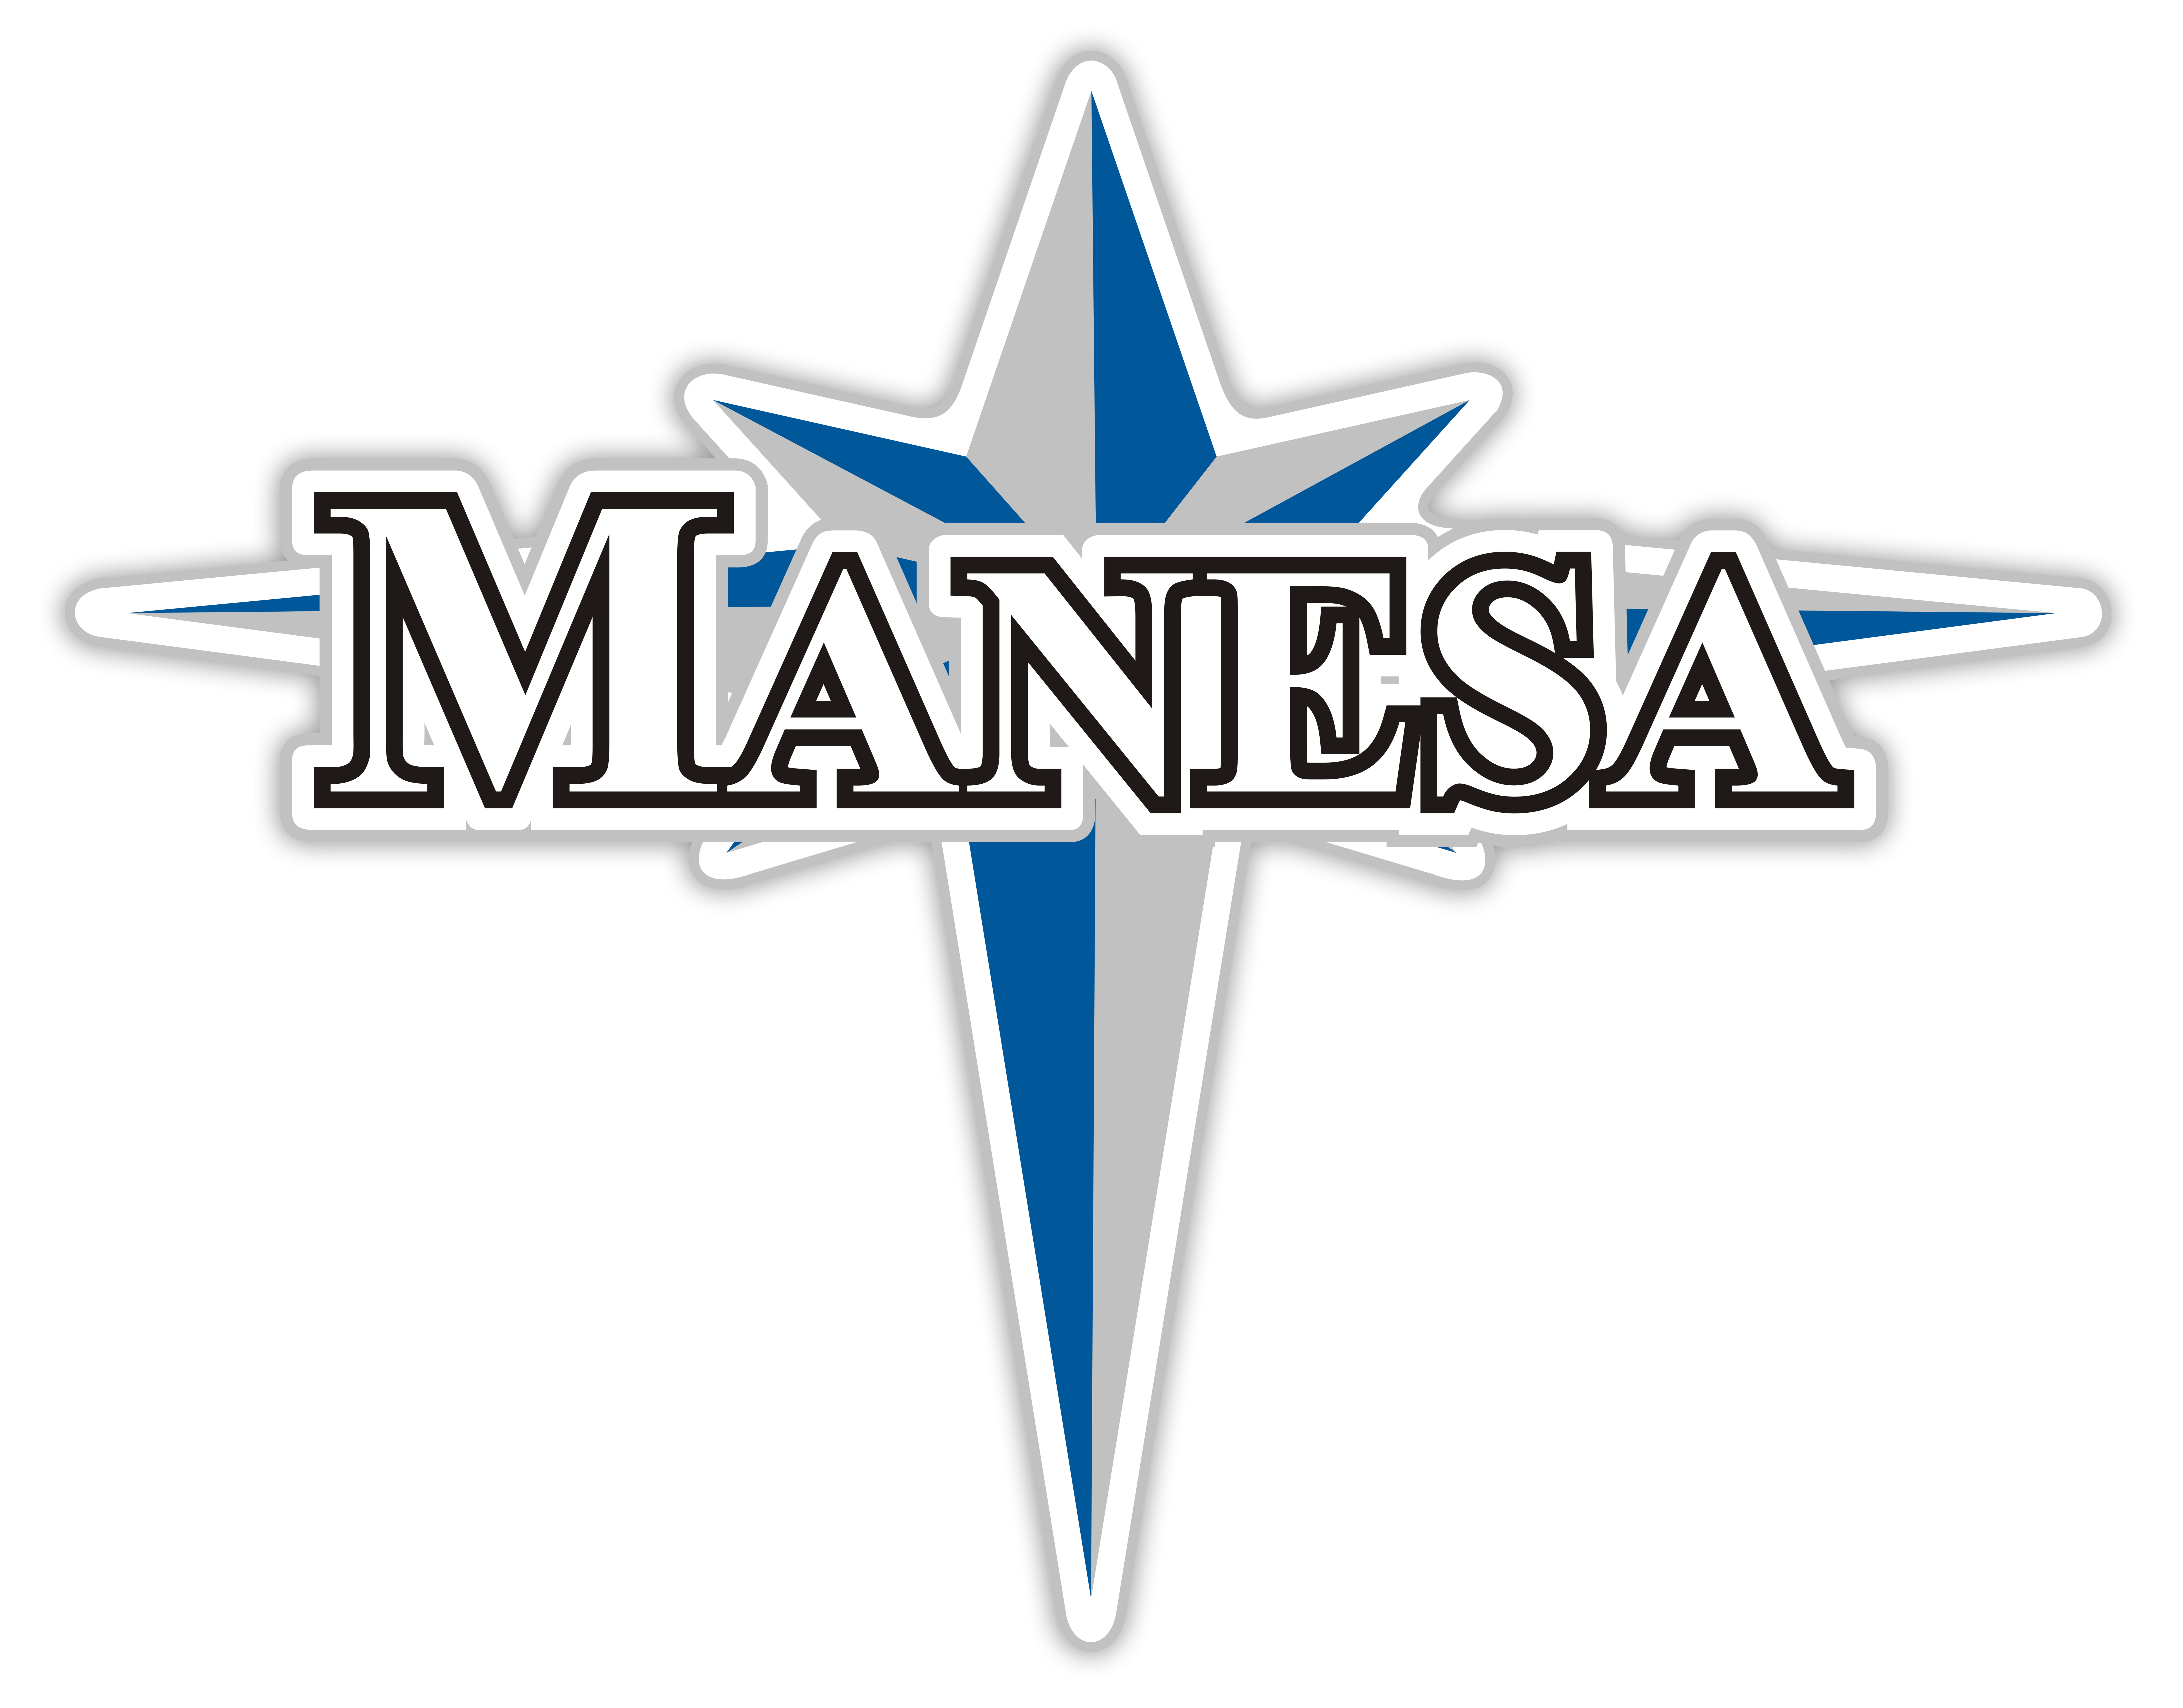 Manesa